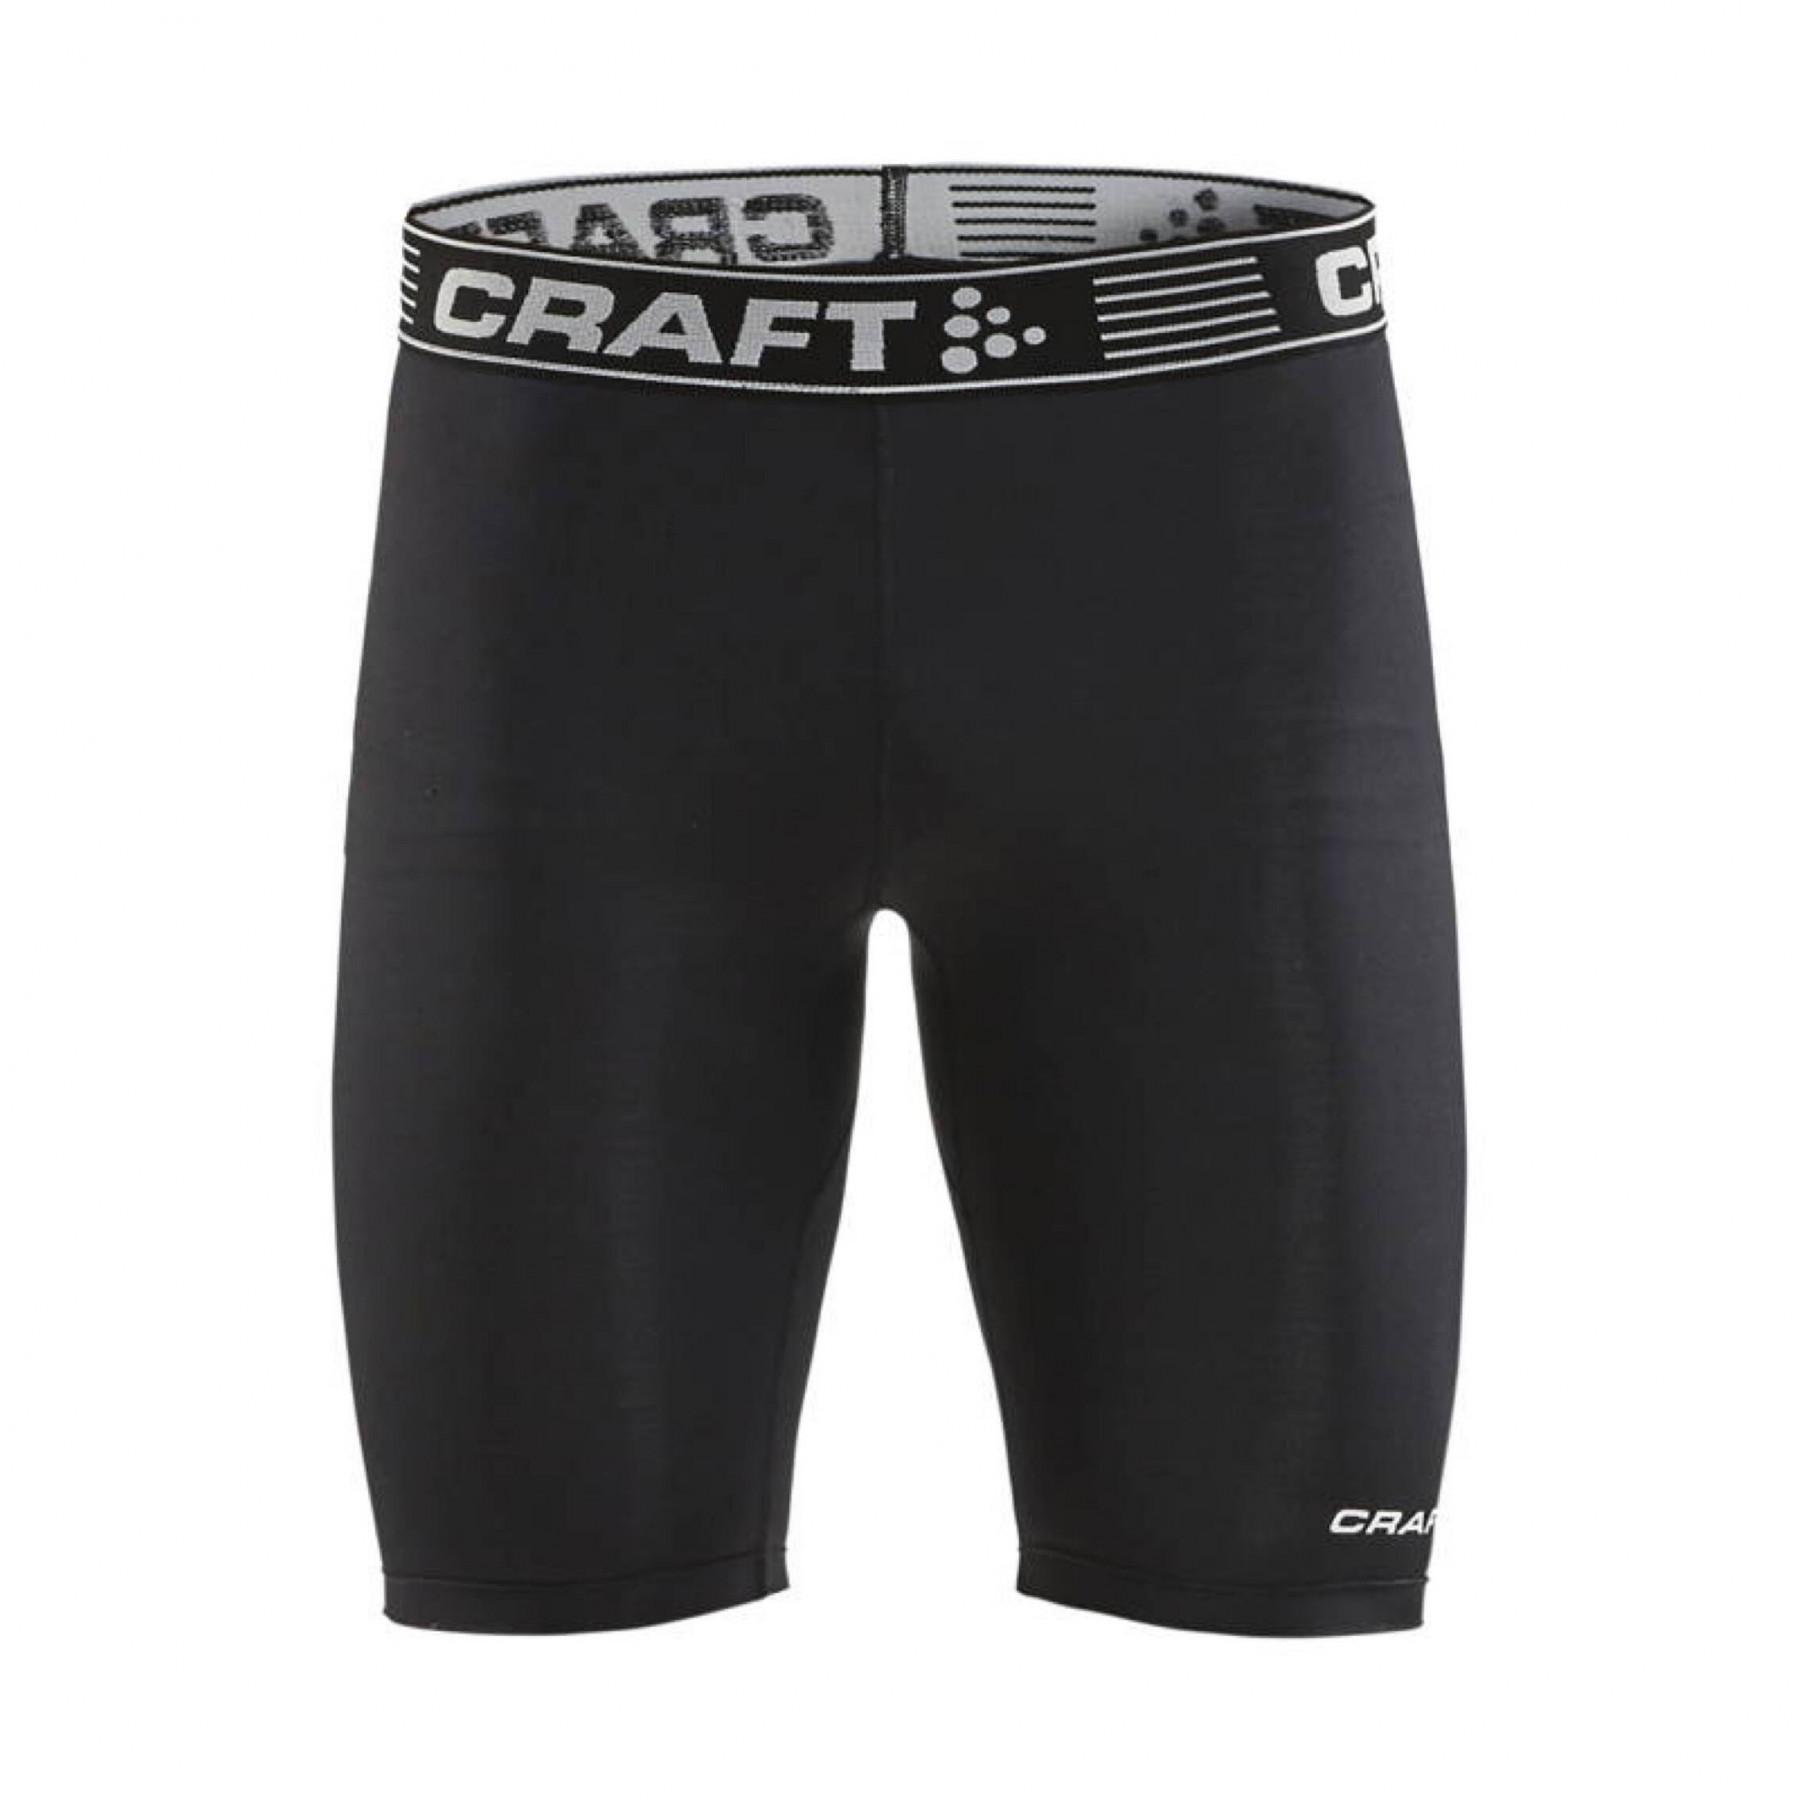 Compression shorts Craft pro control